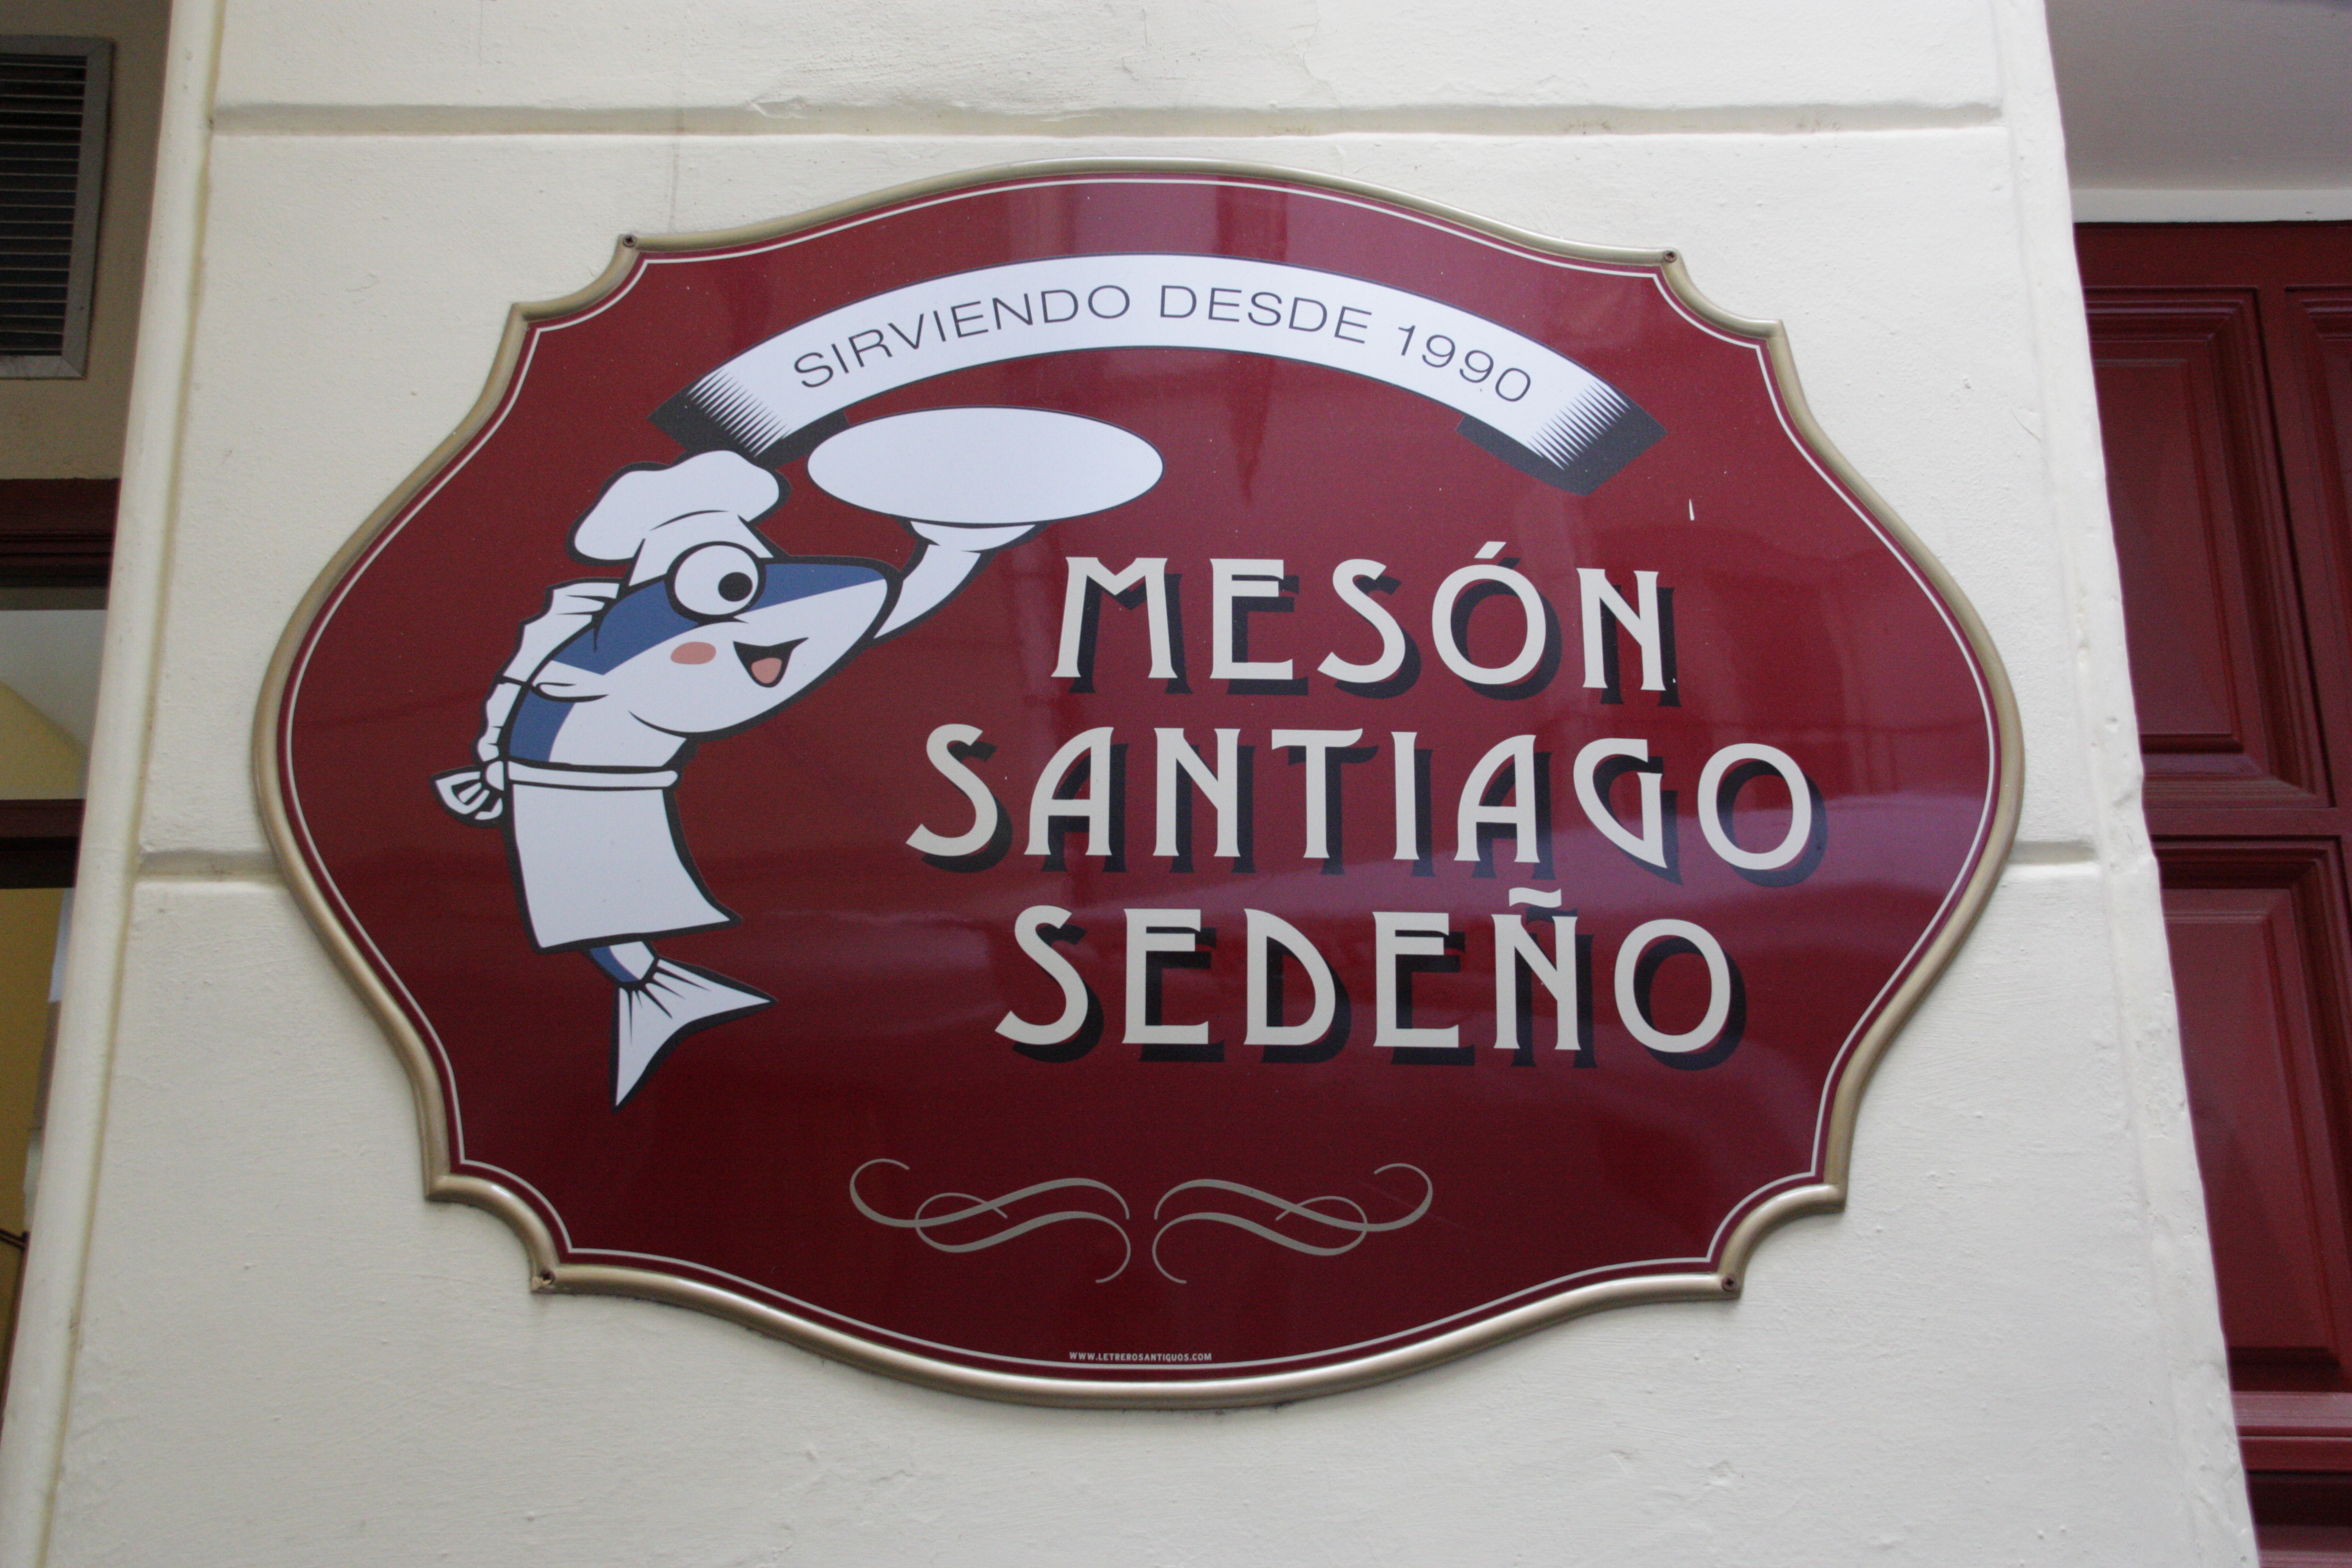 Mesón Santiago Sedeño - Cocina malagueña en el centro de Málaga